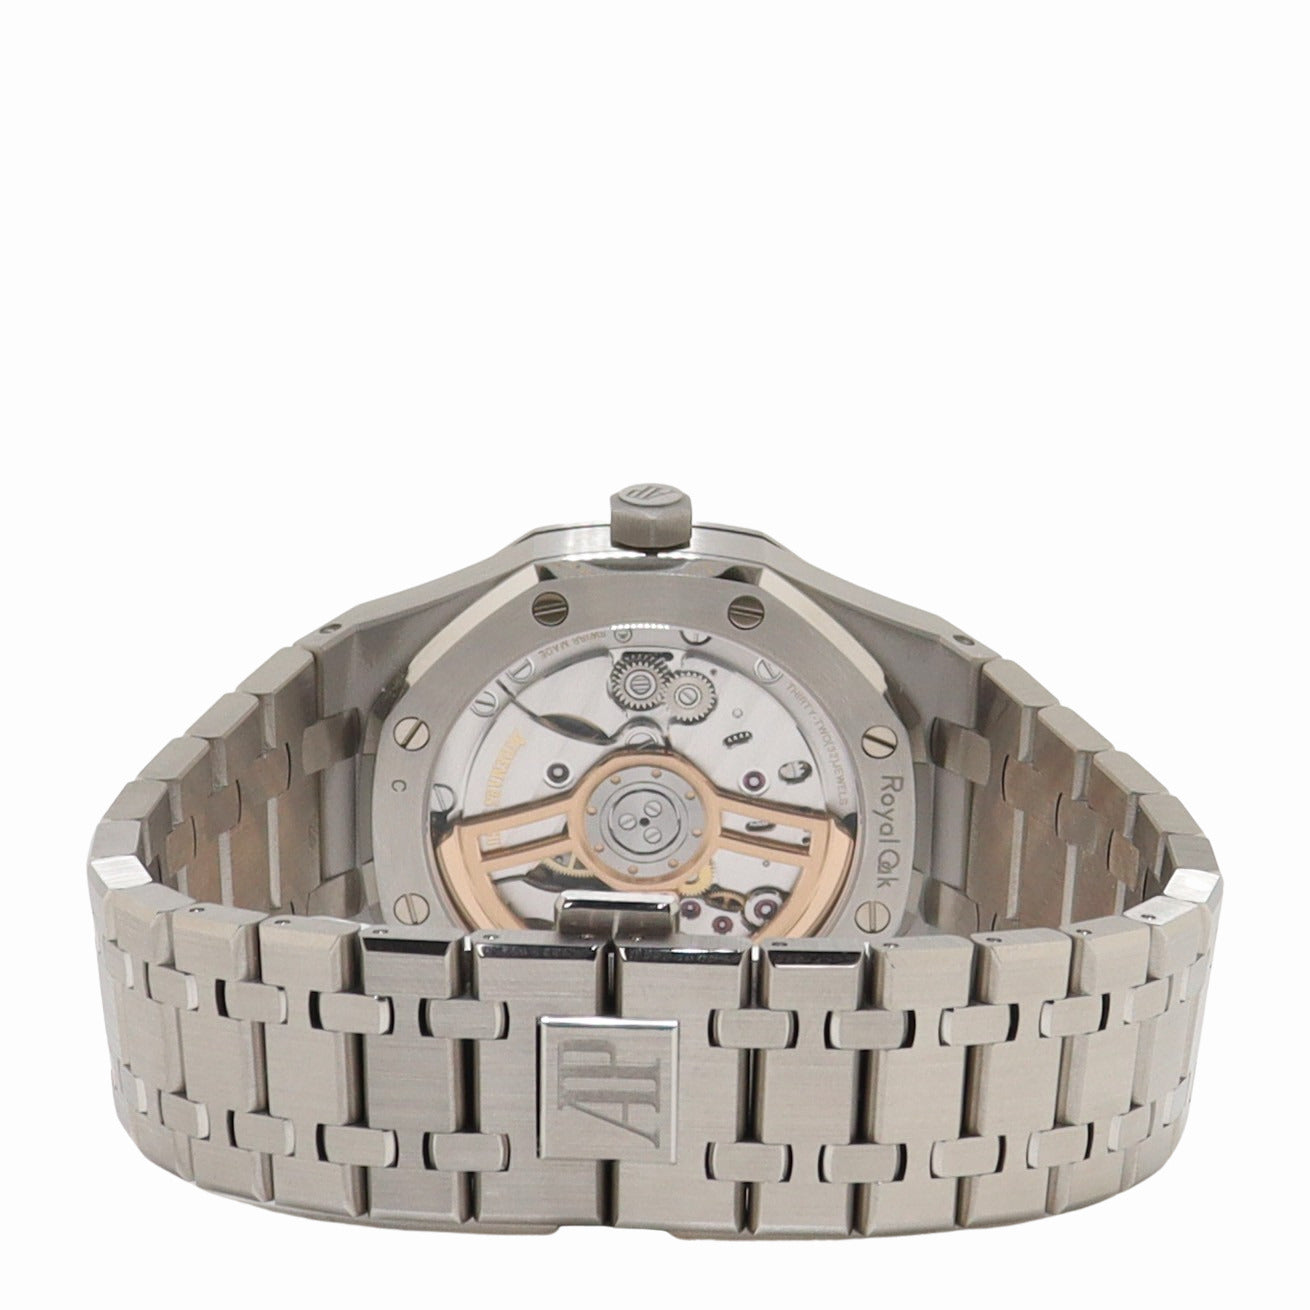 Audemars Piguet Royal Oak 41mm Stainless Steel White Grande Tapisserie Dial Watch Reference# 15500ST.OO.1220ST.04 - Happy Jewelers Fine Jewelry Lifetime Warranty